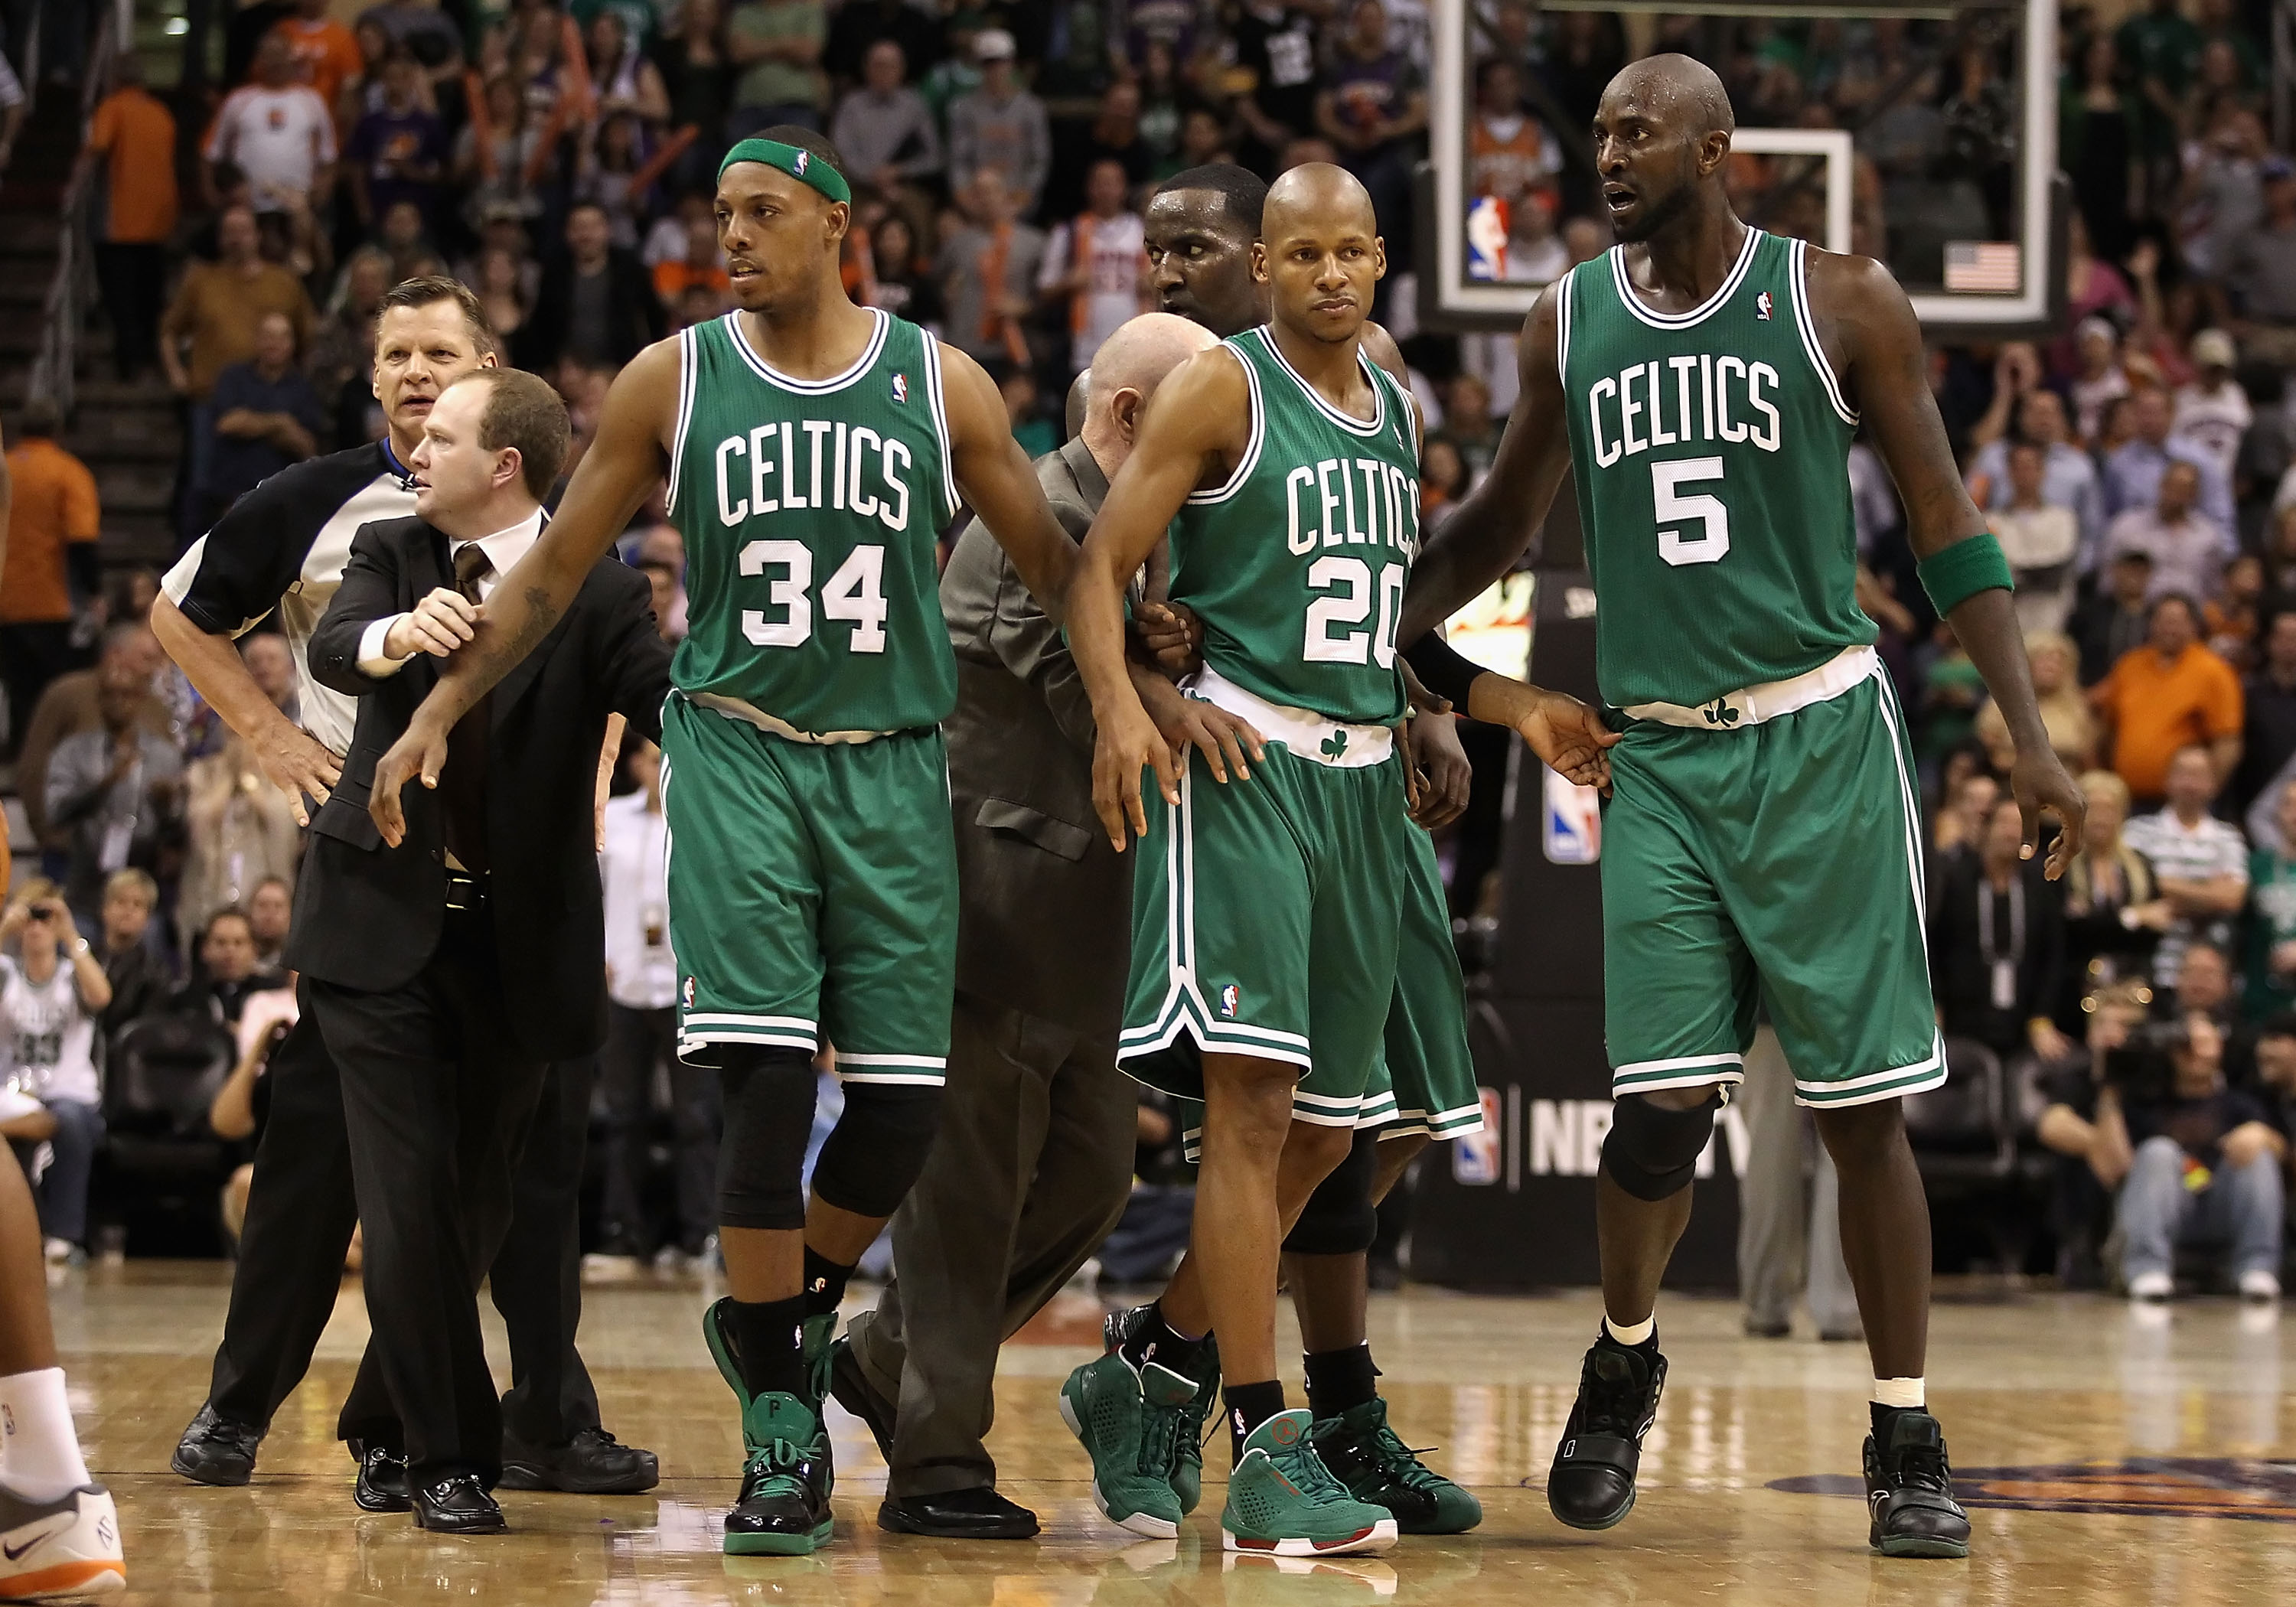 Rumor: Celtics F Kevin Garnett to consider retirement after